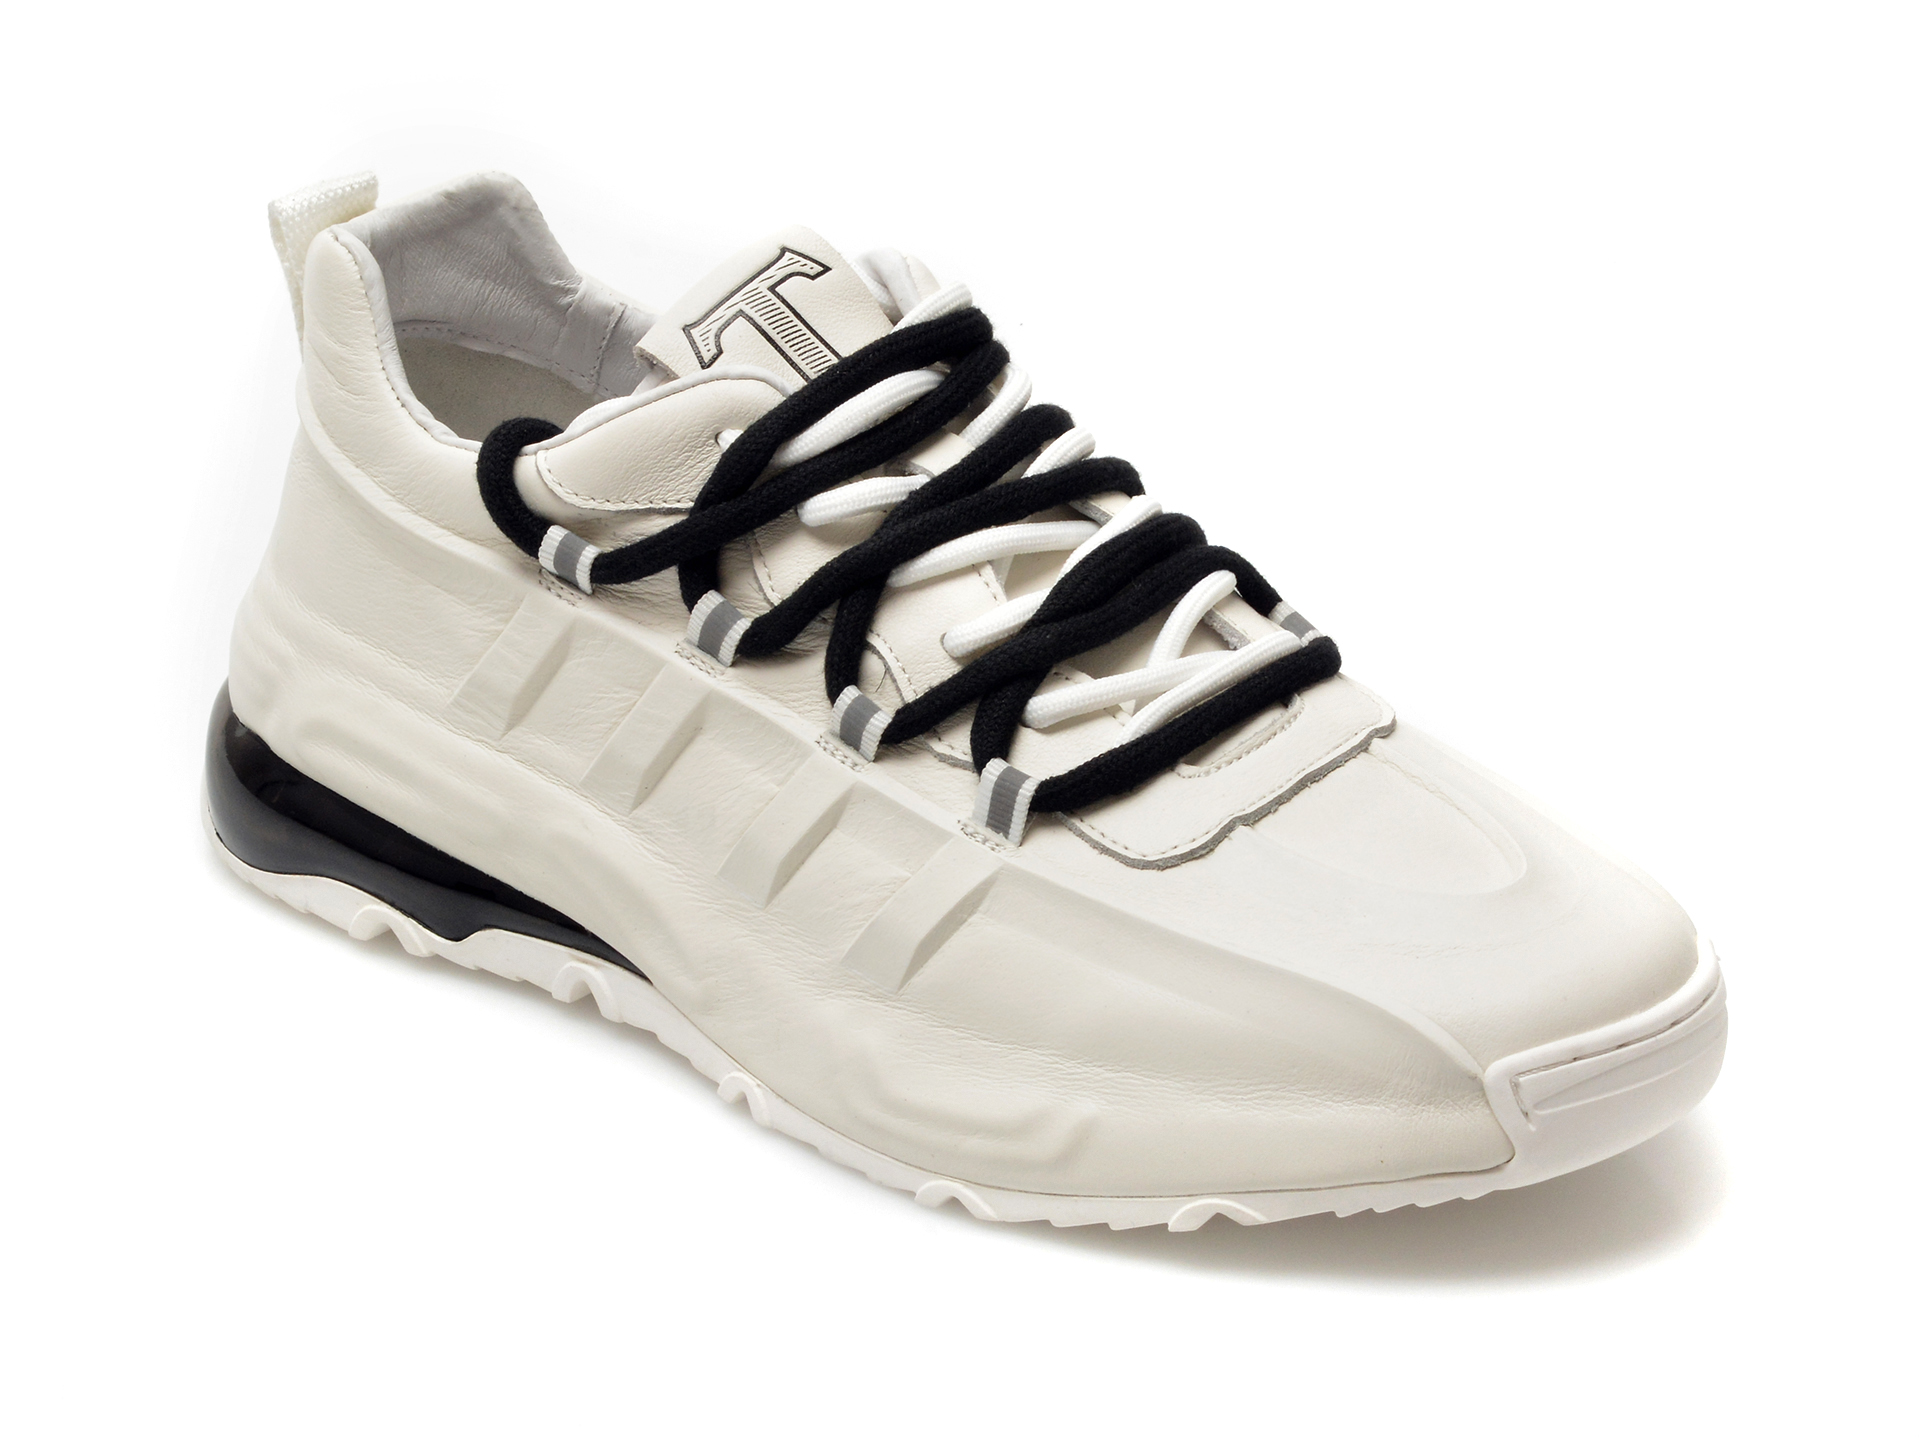 Pantofi sport OTTER albi, A69771, din piele naturala Otter